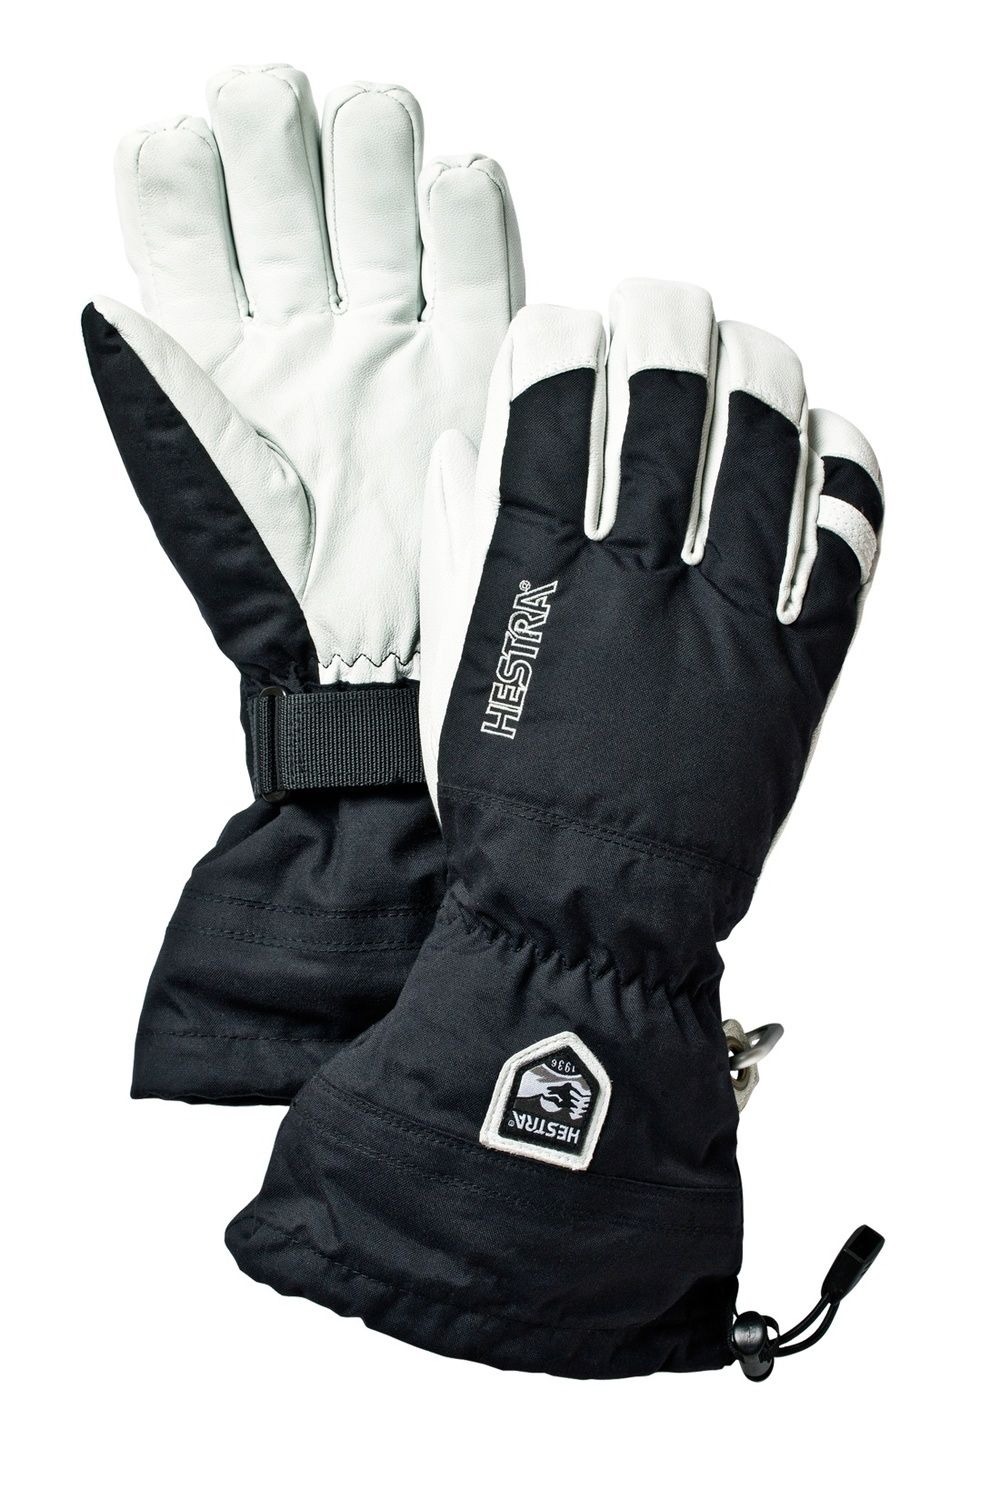 Hestra Ski Gloves Size Chart